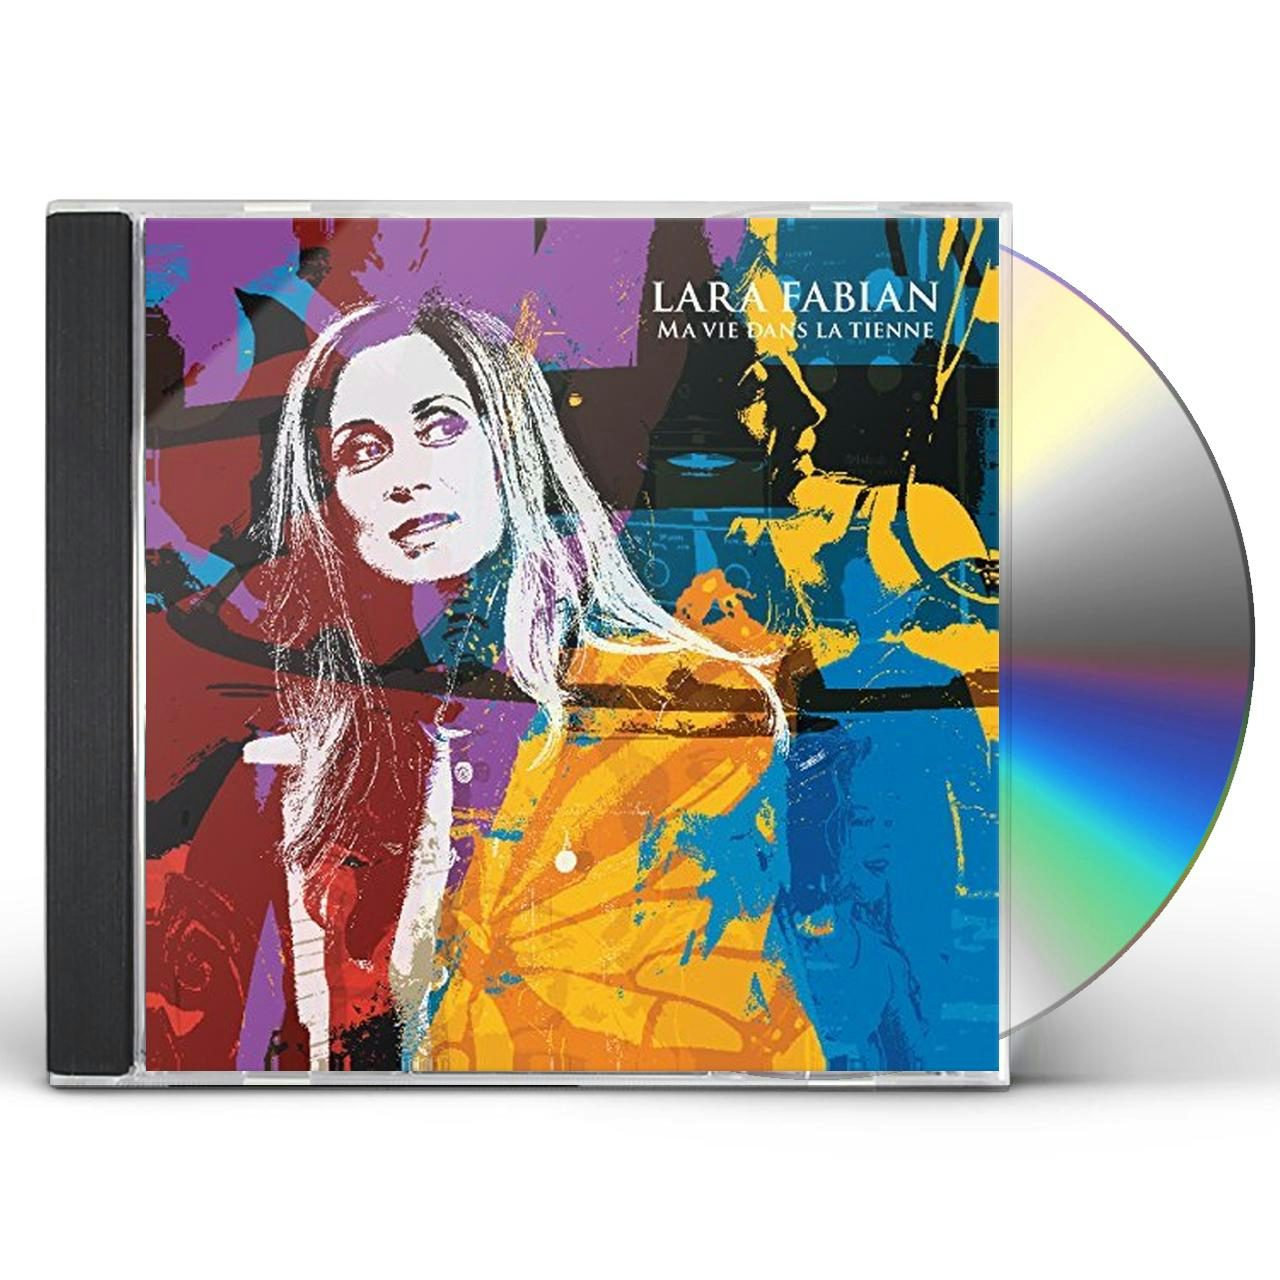 Lara Fabian Store: Official Merch & Vinyl